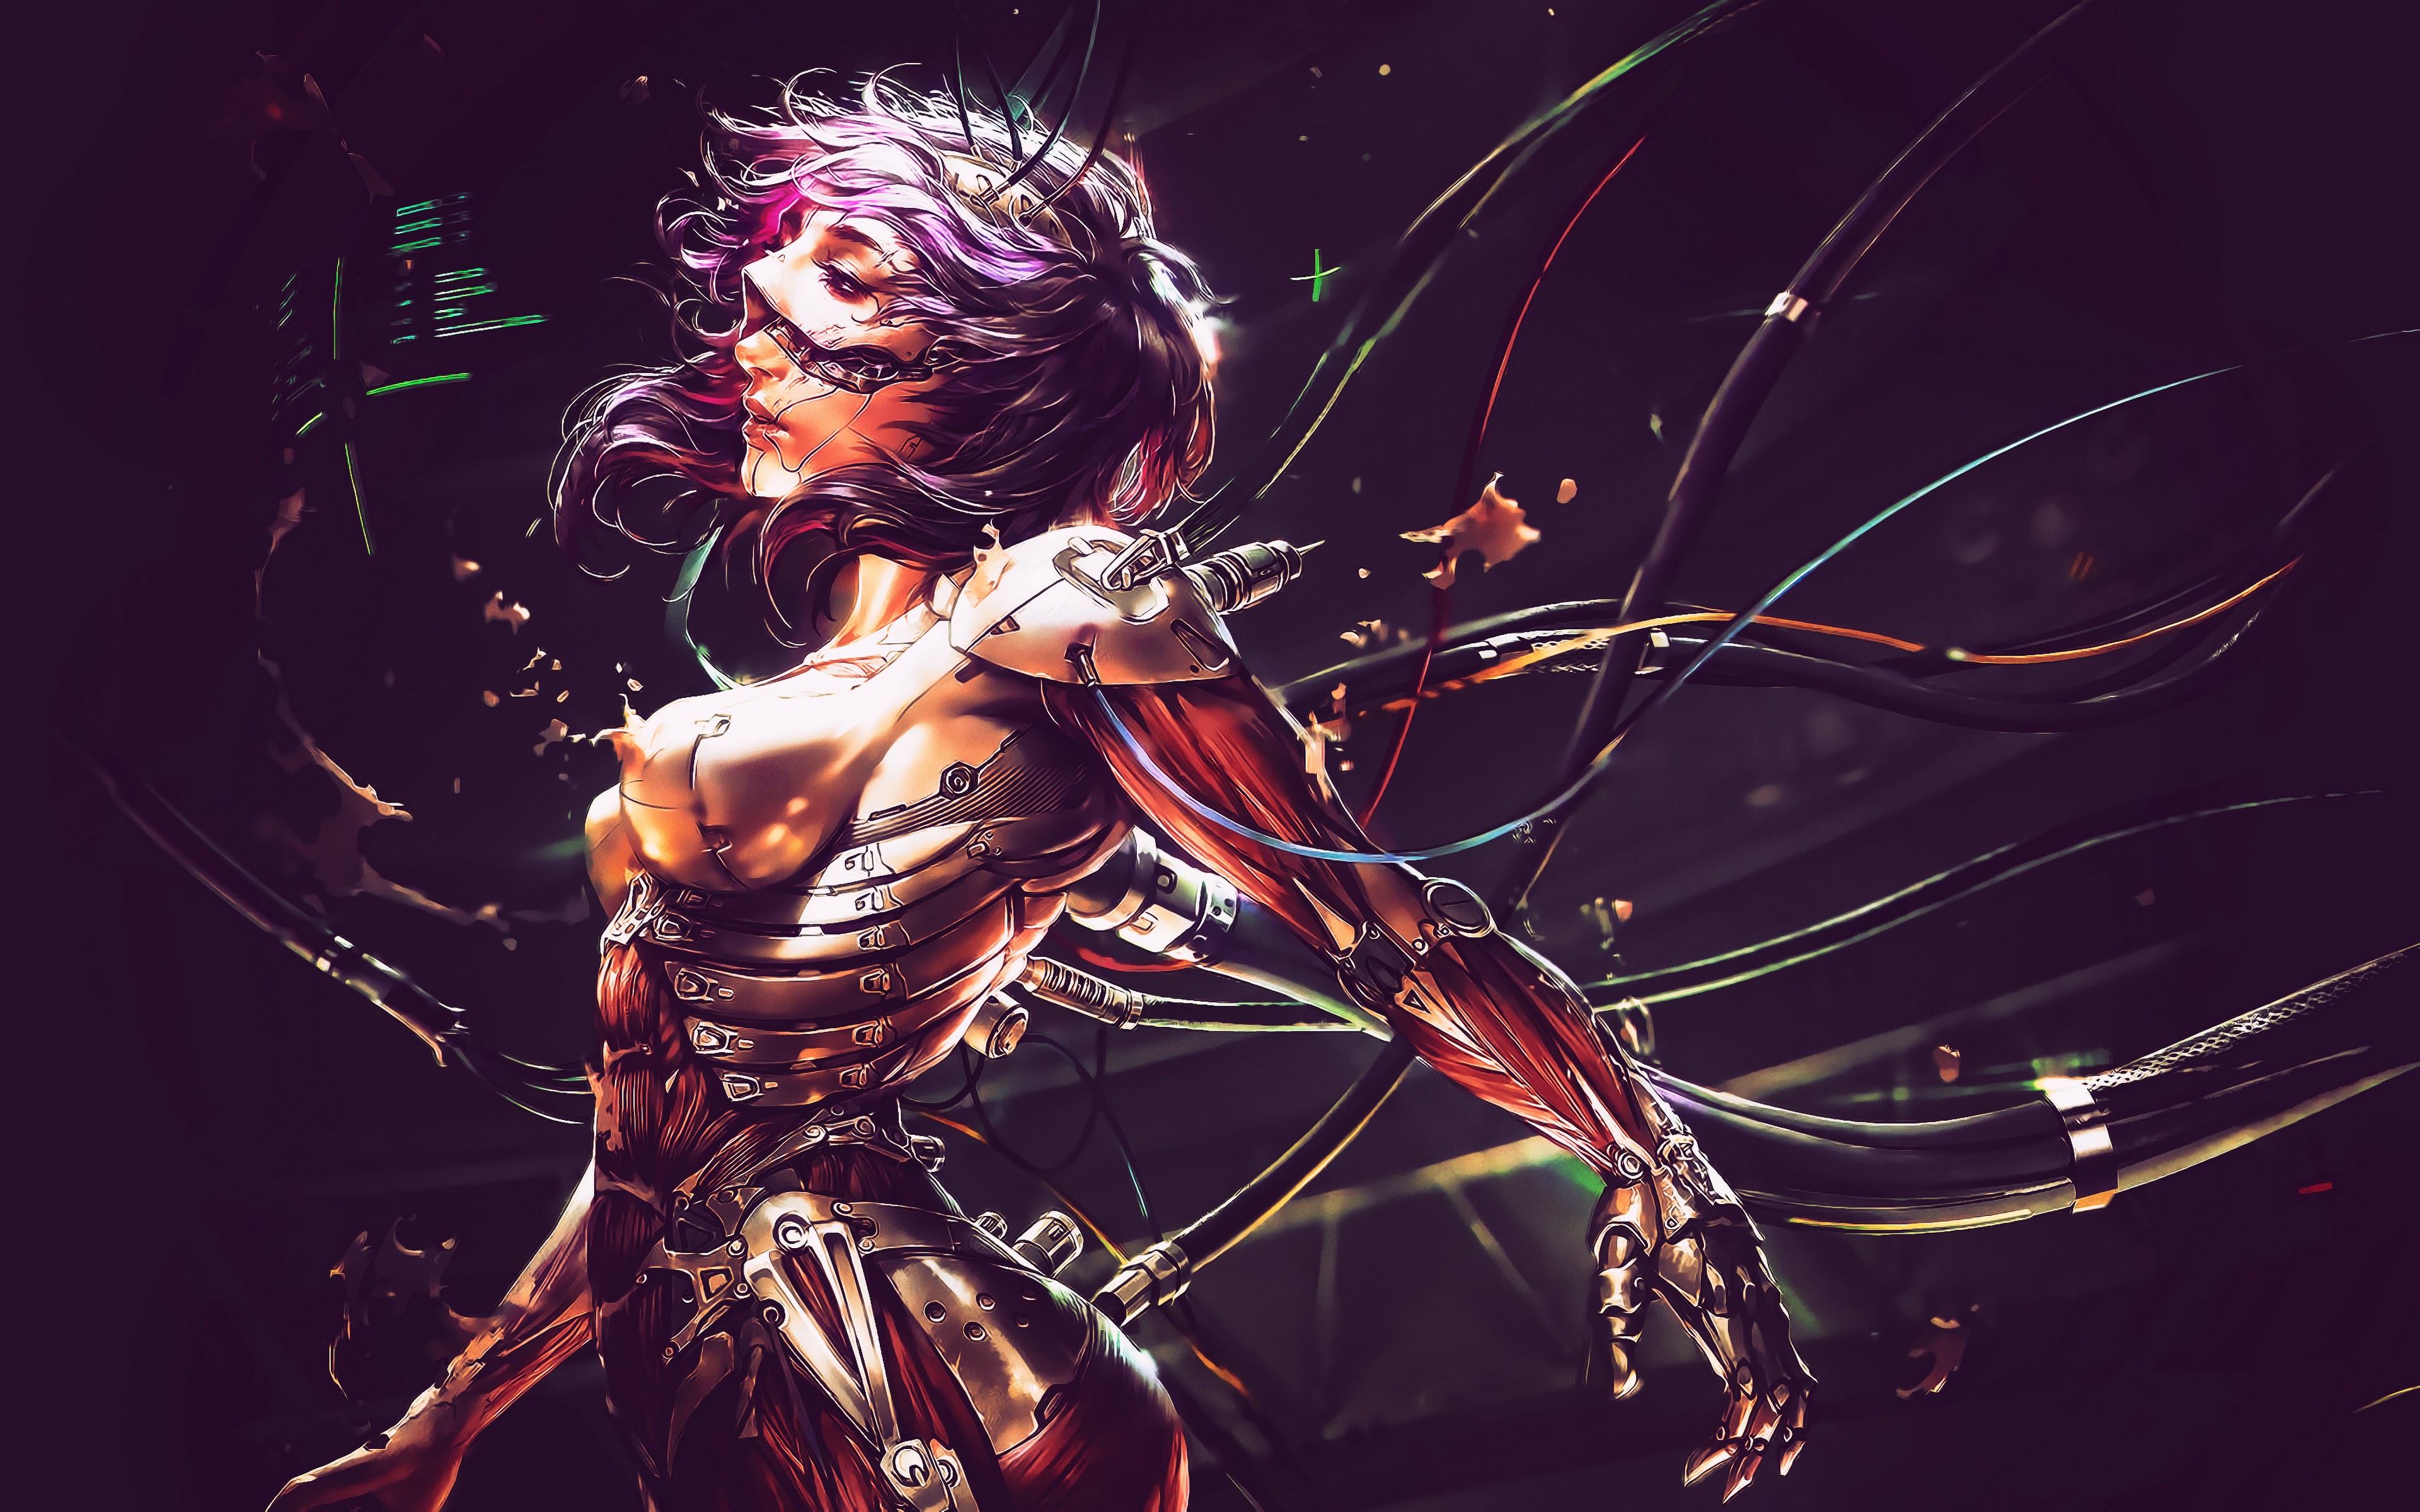 Cyborg Futuristic Cyberpunk Girl Wallpapers